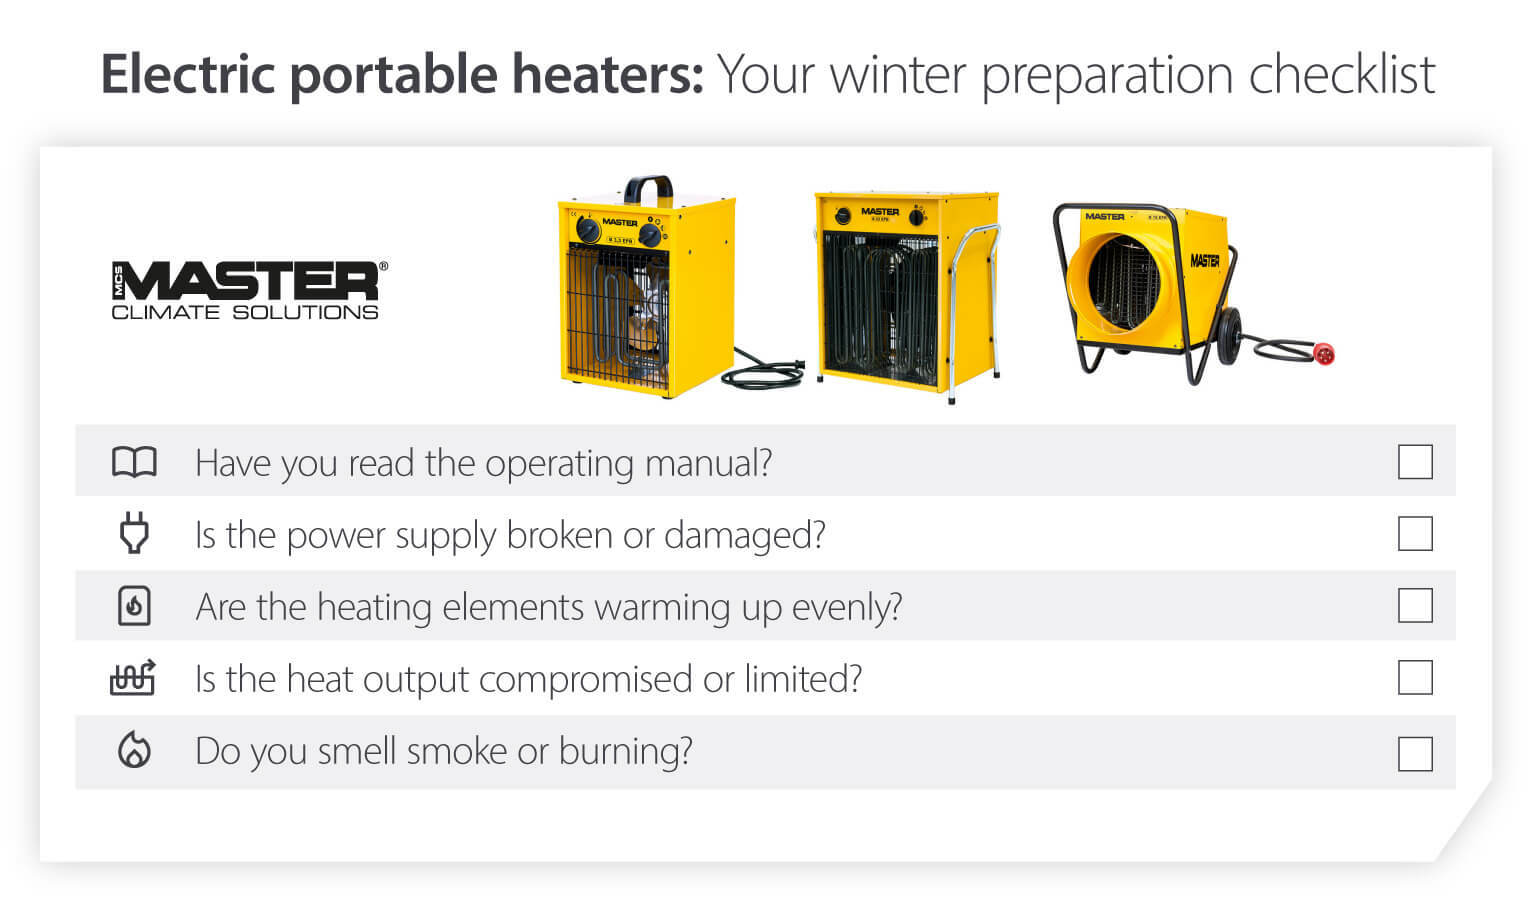 Lista de comprobación de invierno para calentadores eléctricos portátiles: preparación del calentador para temperaturas frías: imagen infográfica